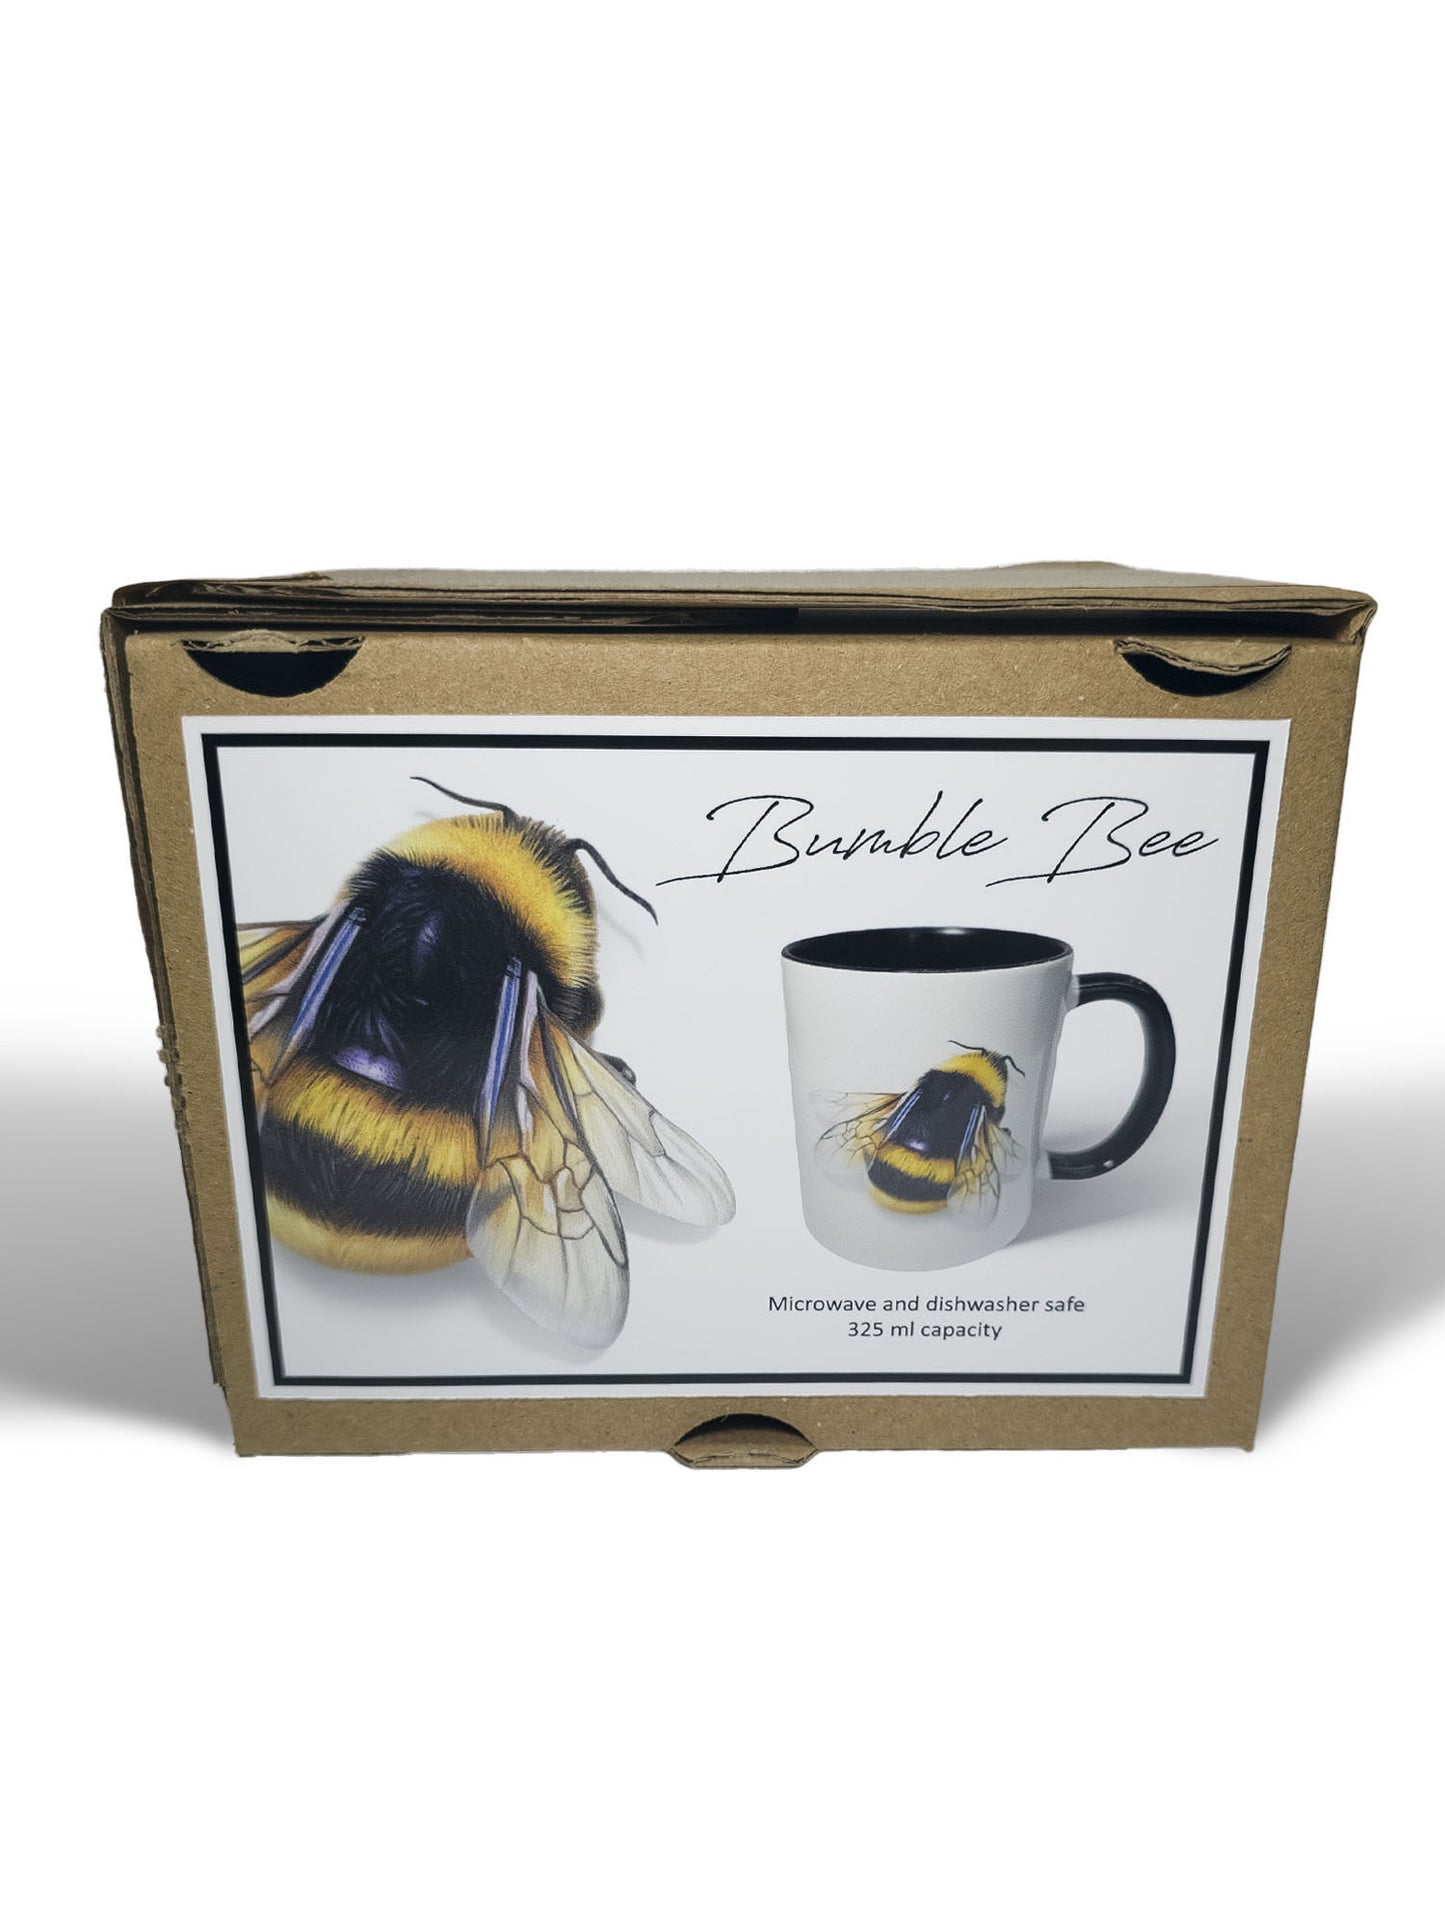 Bumble Bee ceramic mug